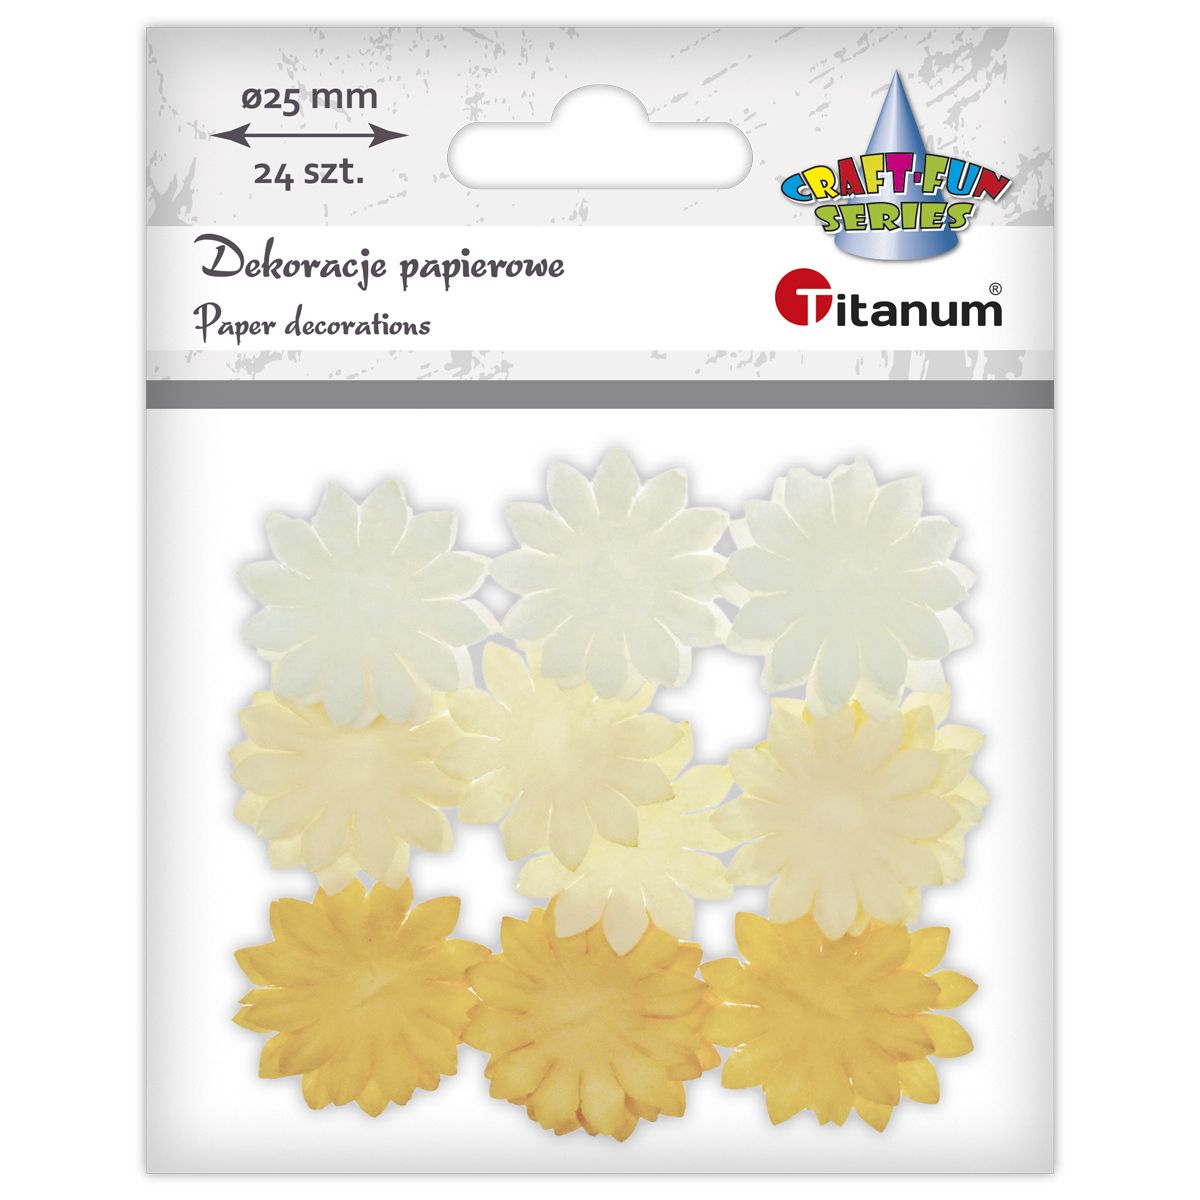 Ozdoba materiałowa Titanum Craft-Fun Series kwiatki (22YX0825-16C)